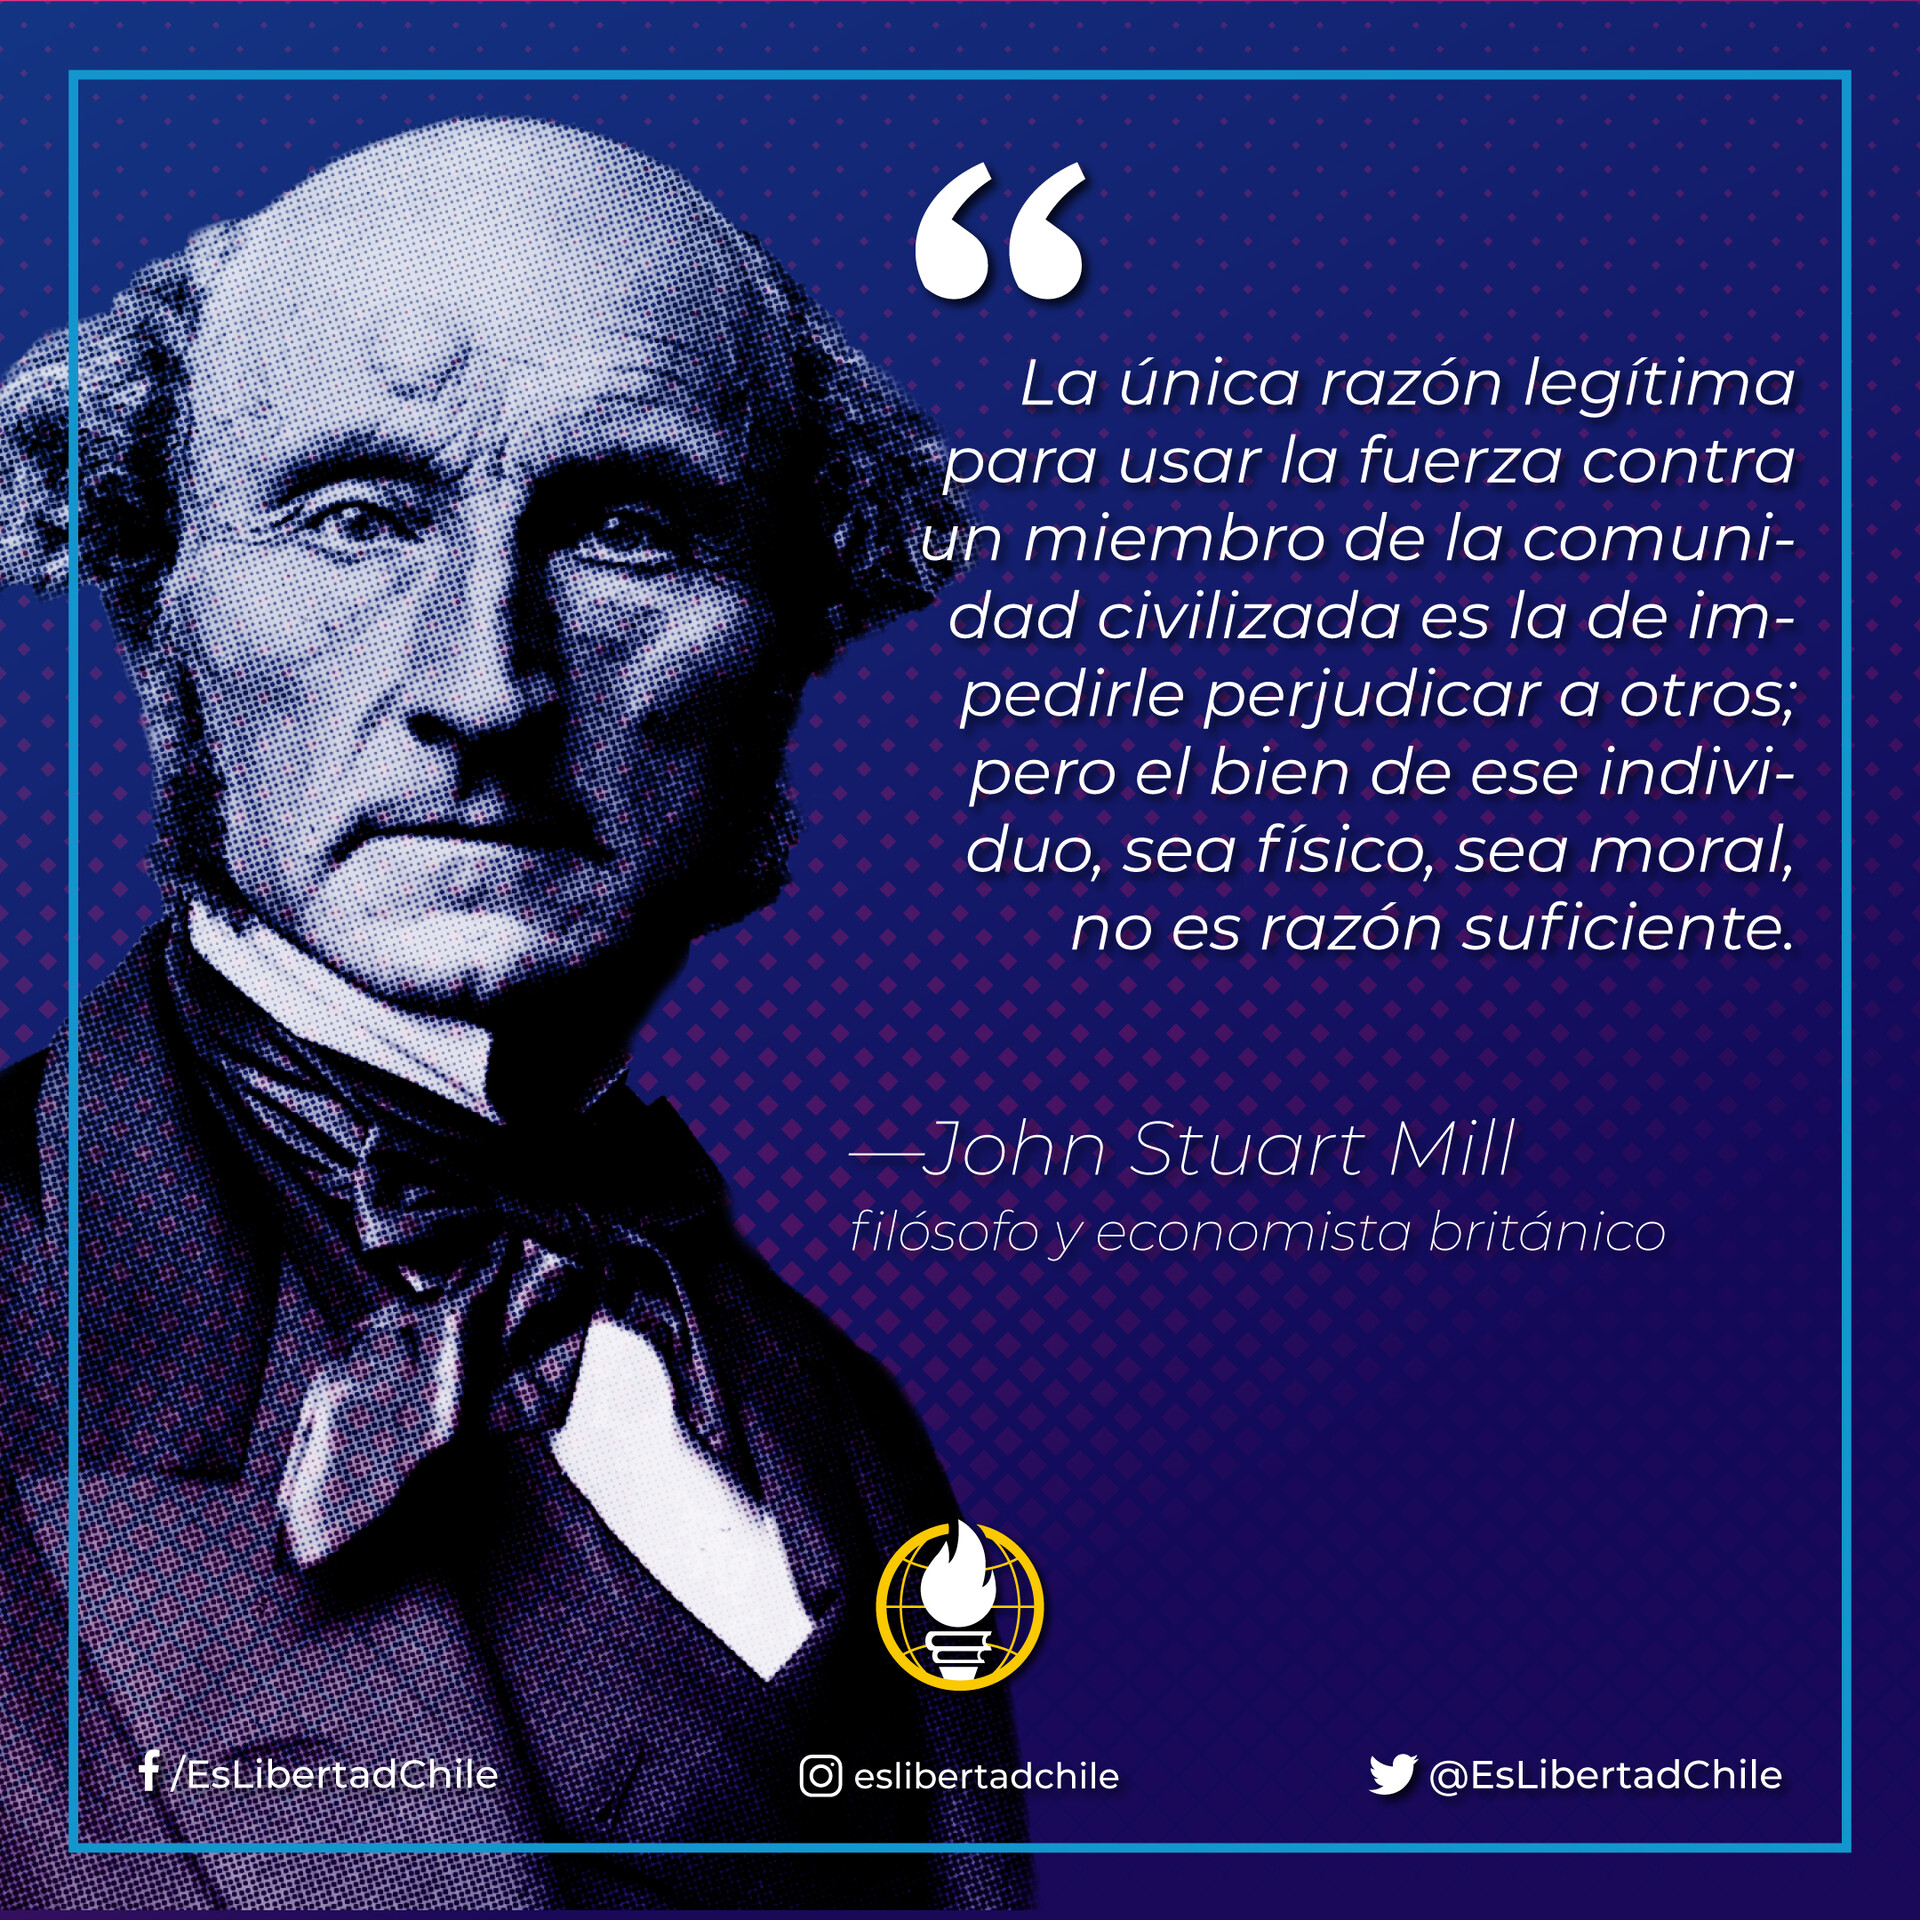 ArtStation - John Stuart Mill | EsLibertad Chile